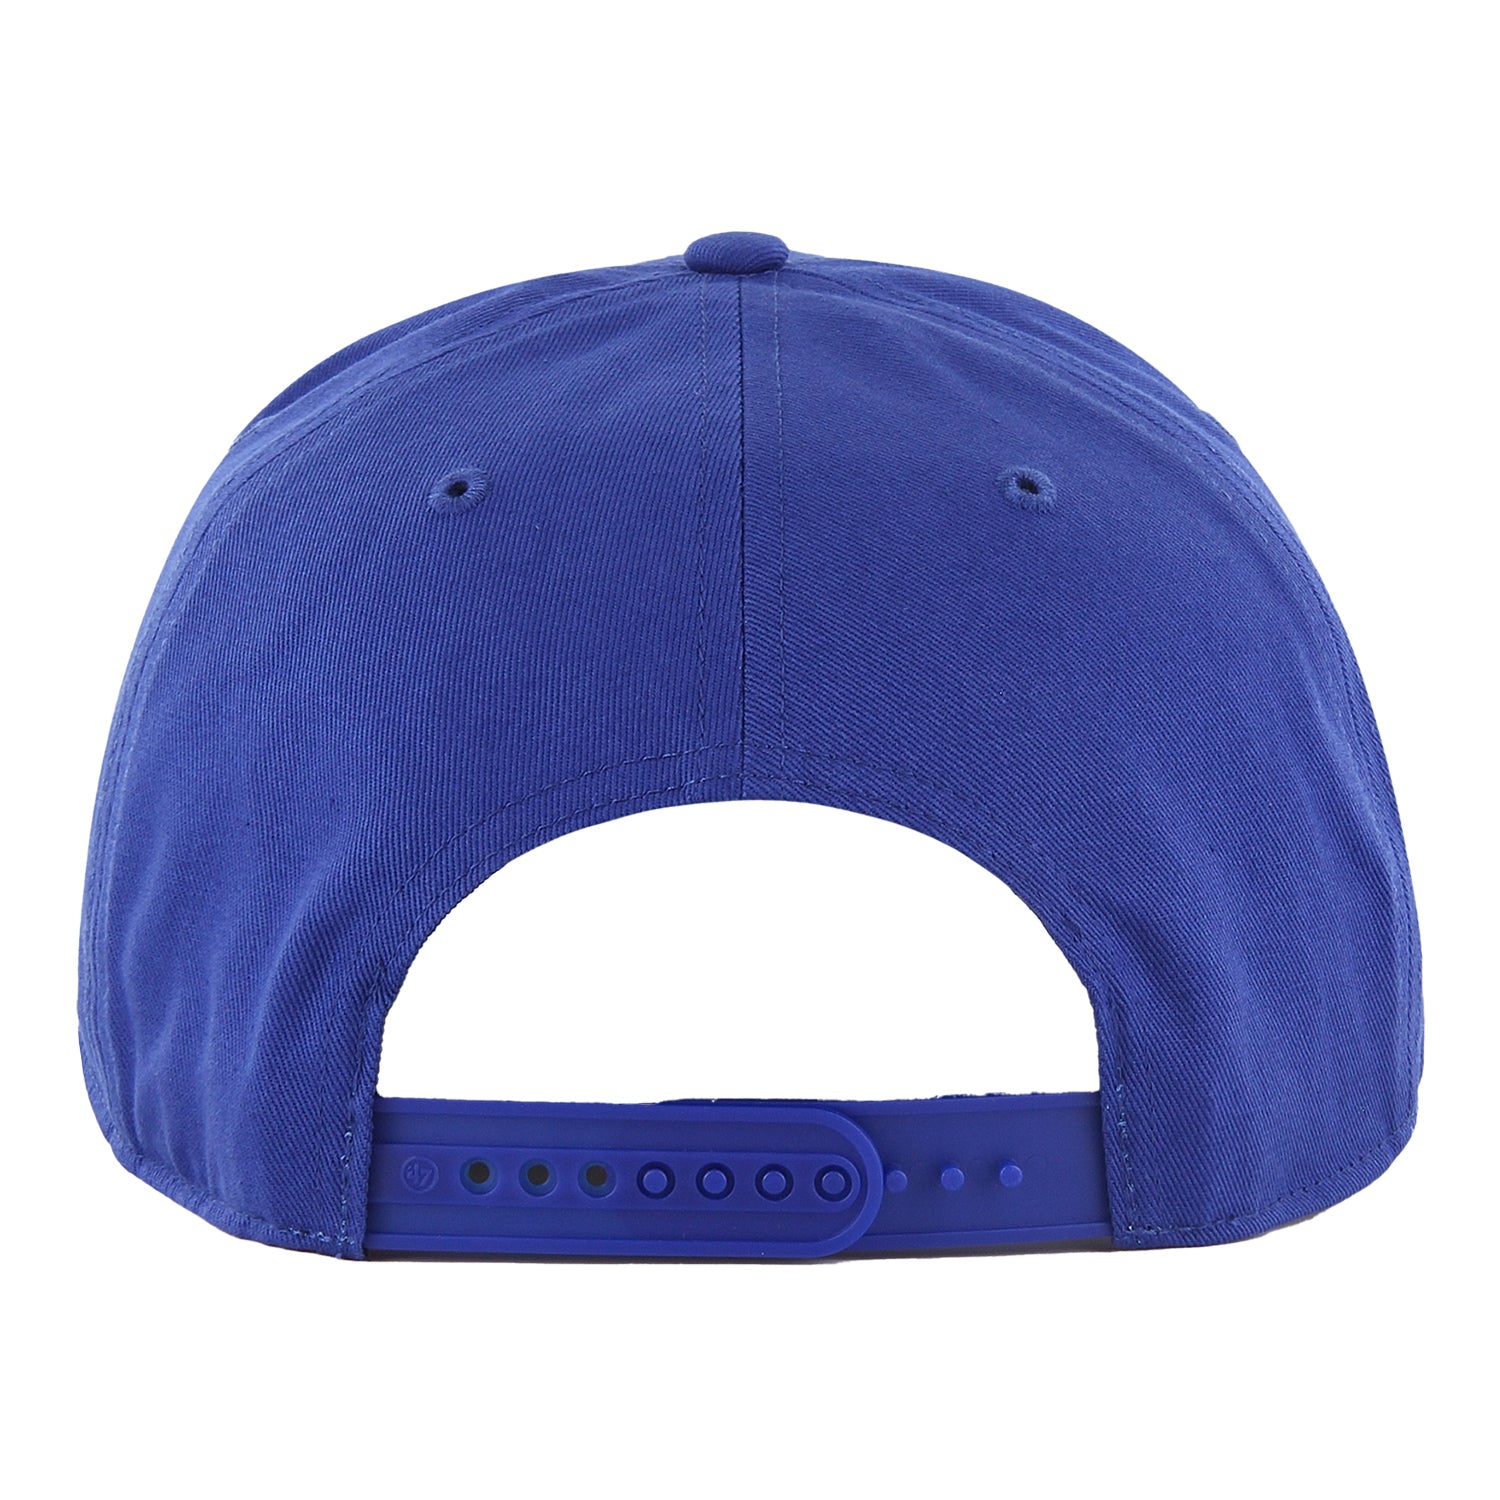 47 Brand Buffalo Bills Hitch Roscoe Adjustable Hat